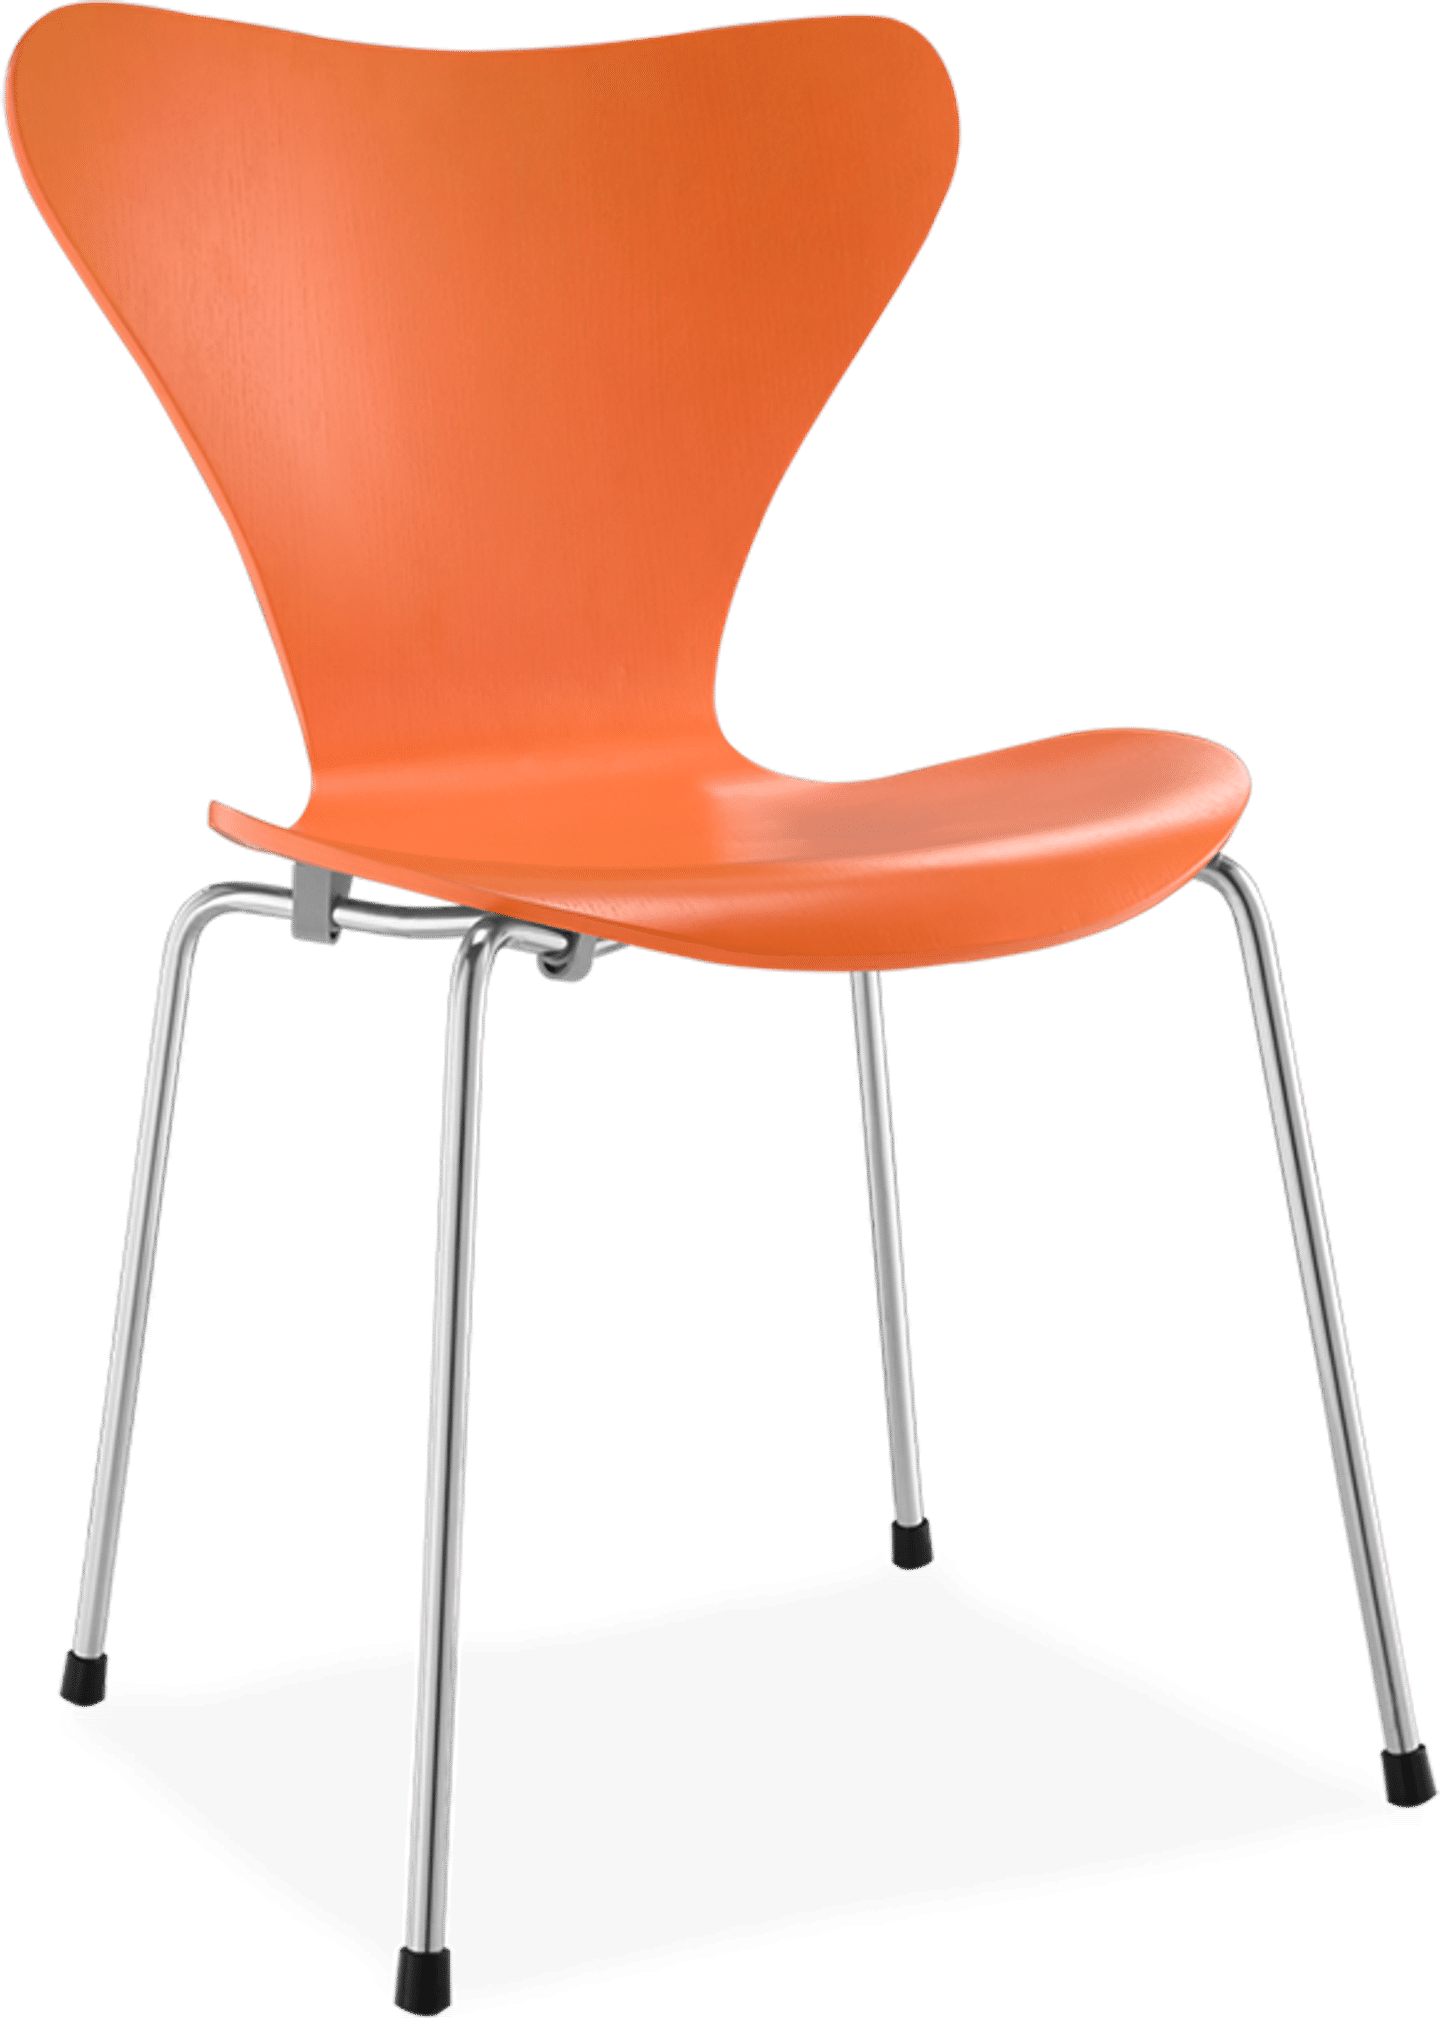 Series 7 Chair Plywood/Orange image.